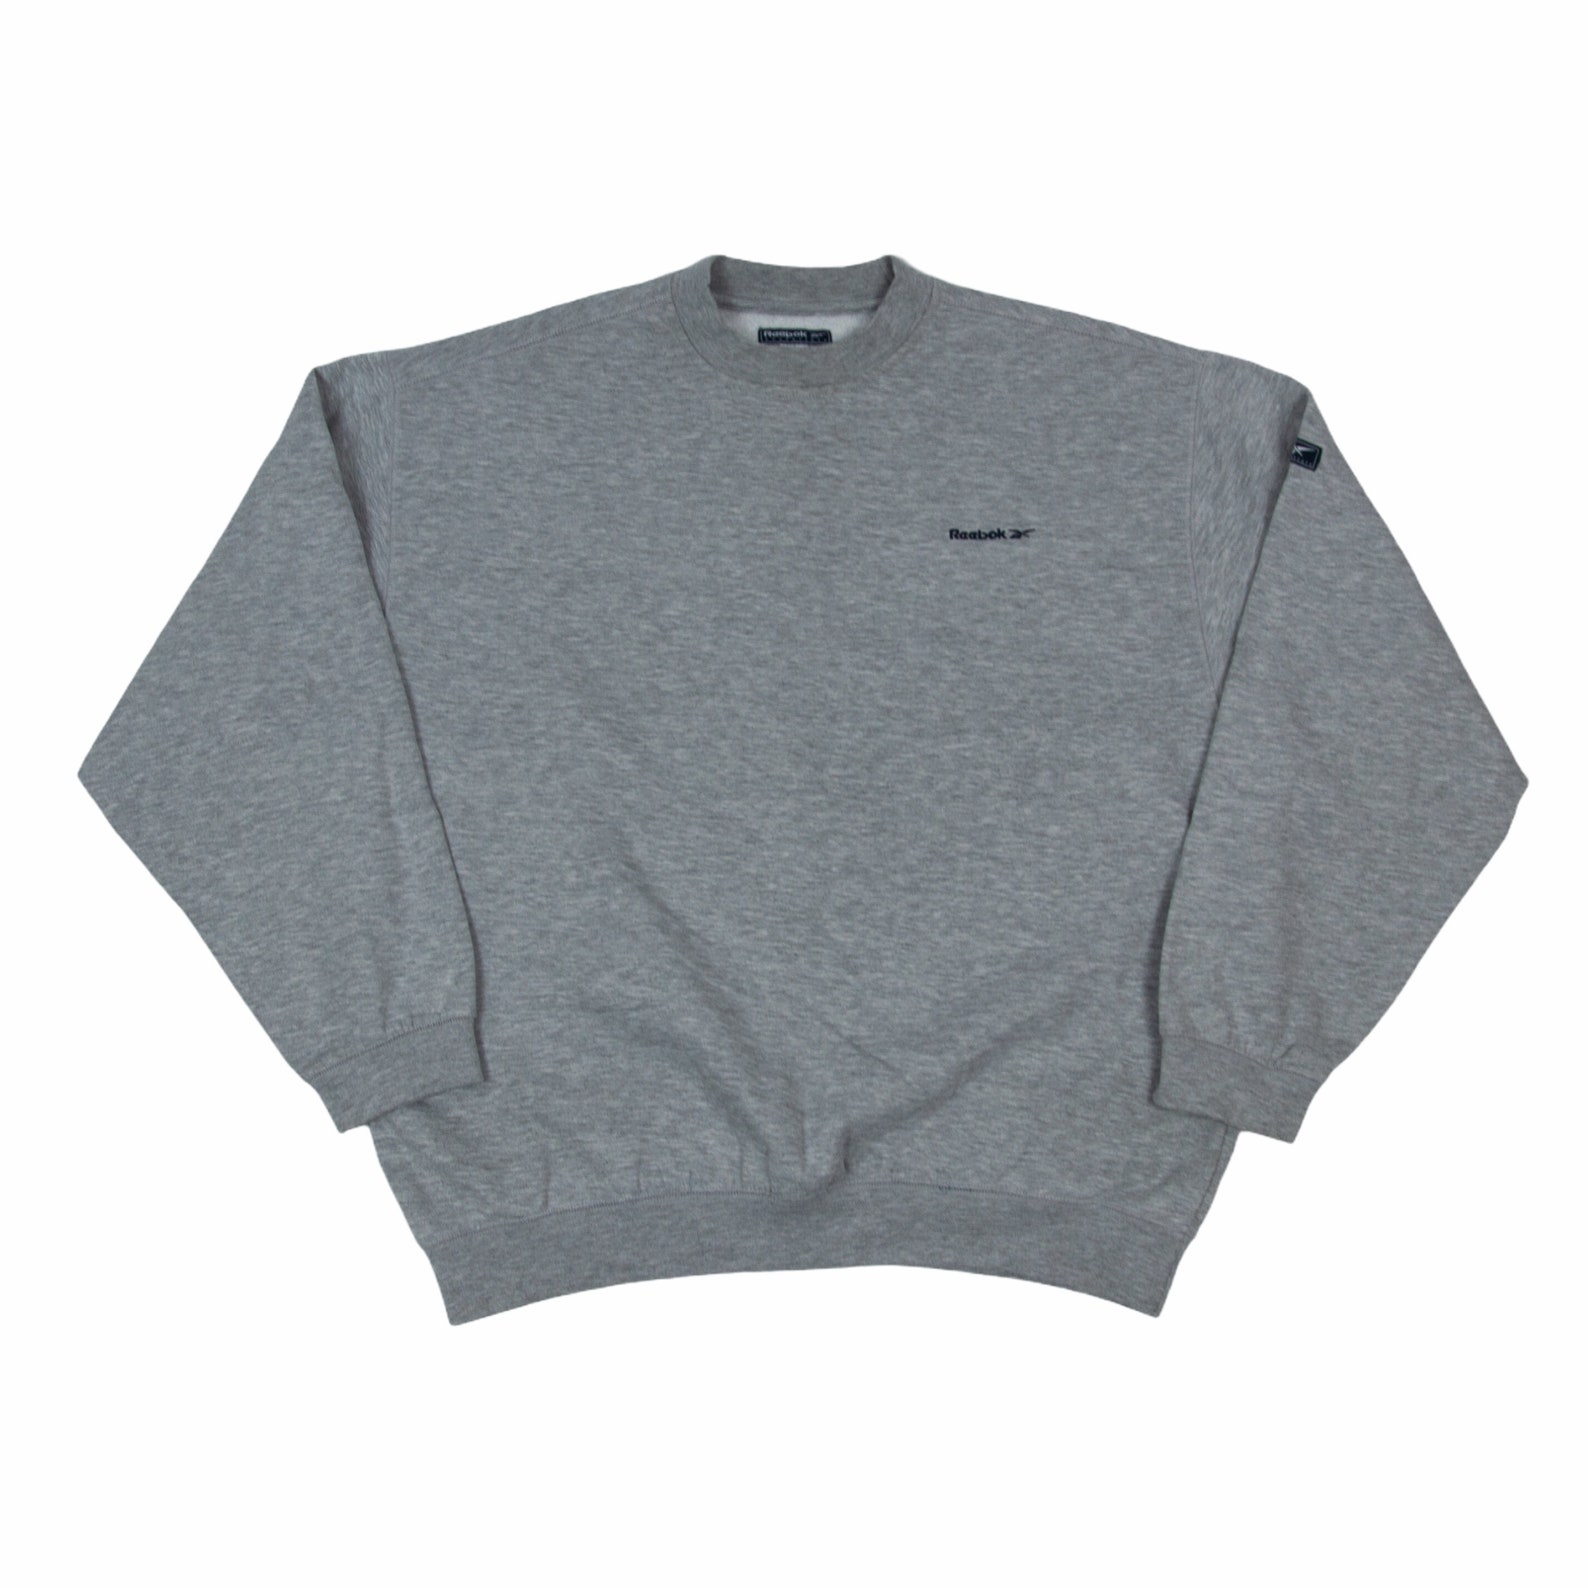 Vintage Reebok Oversized Crewneck Sweatshirt XL Gray | Etsy